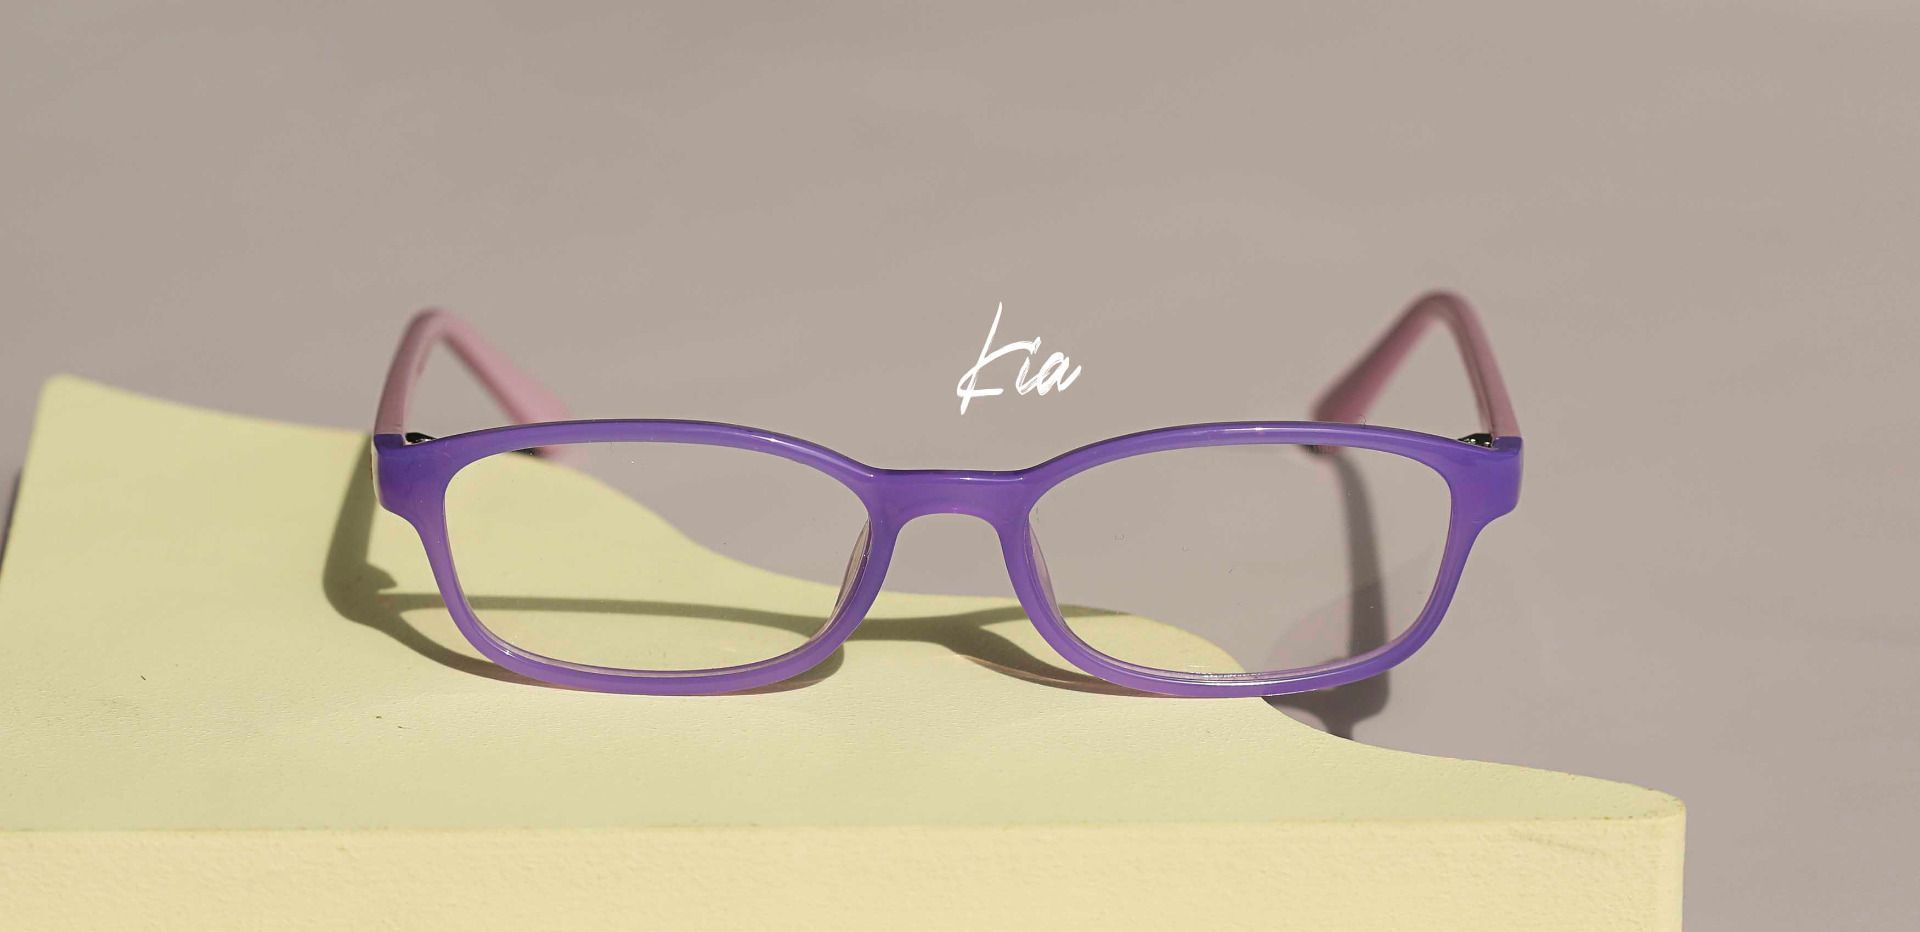 Kia Oval Eyeglasses Frame - Orchid